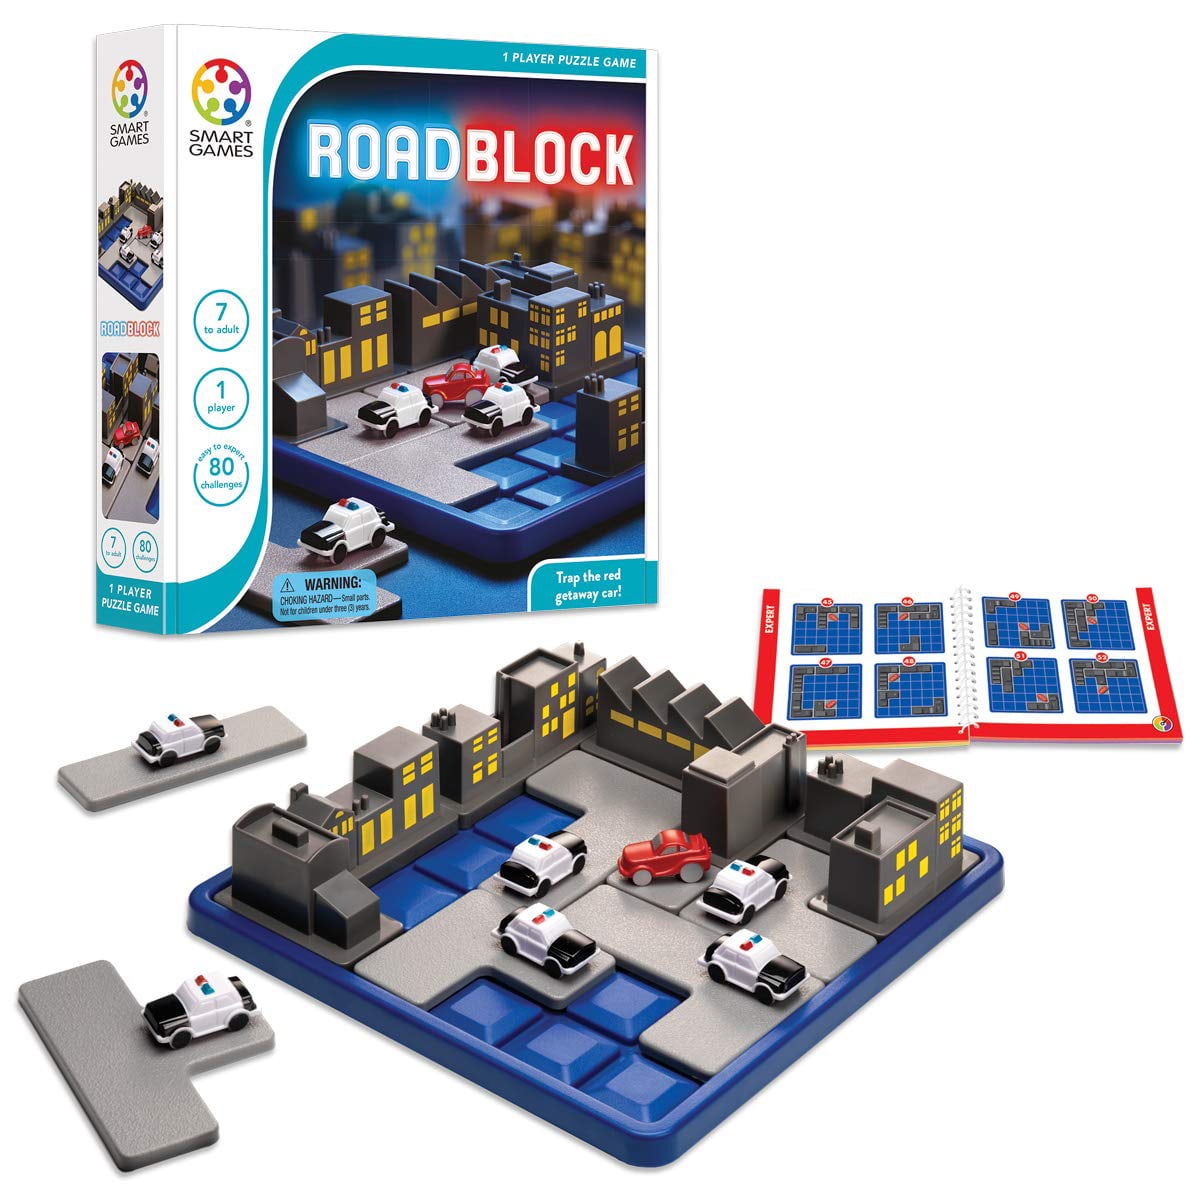 Blocks - Skill games 